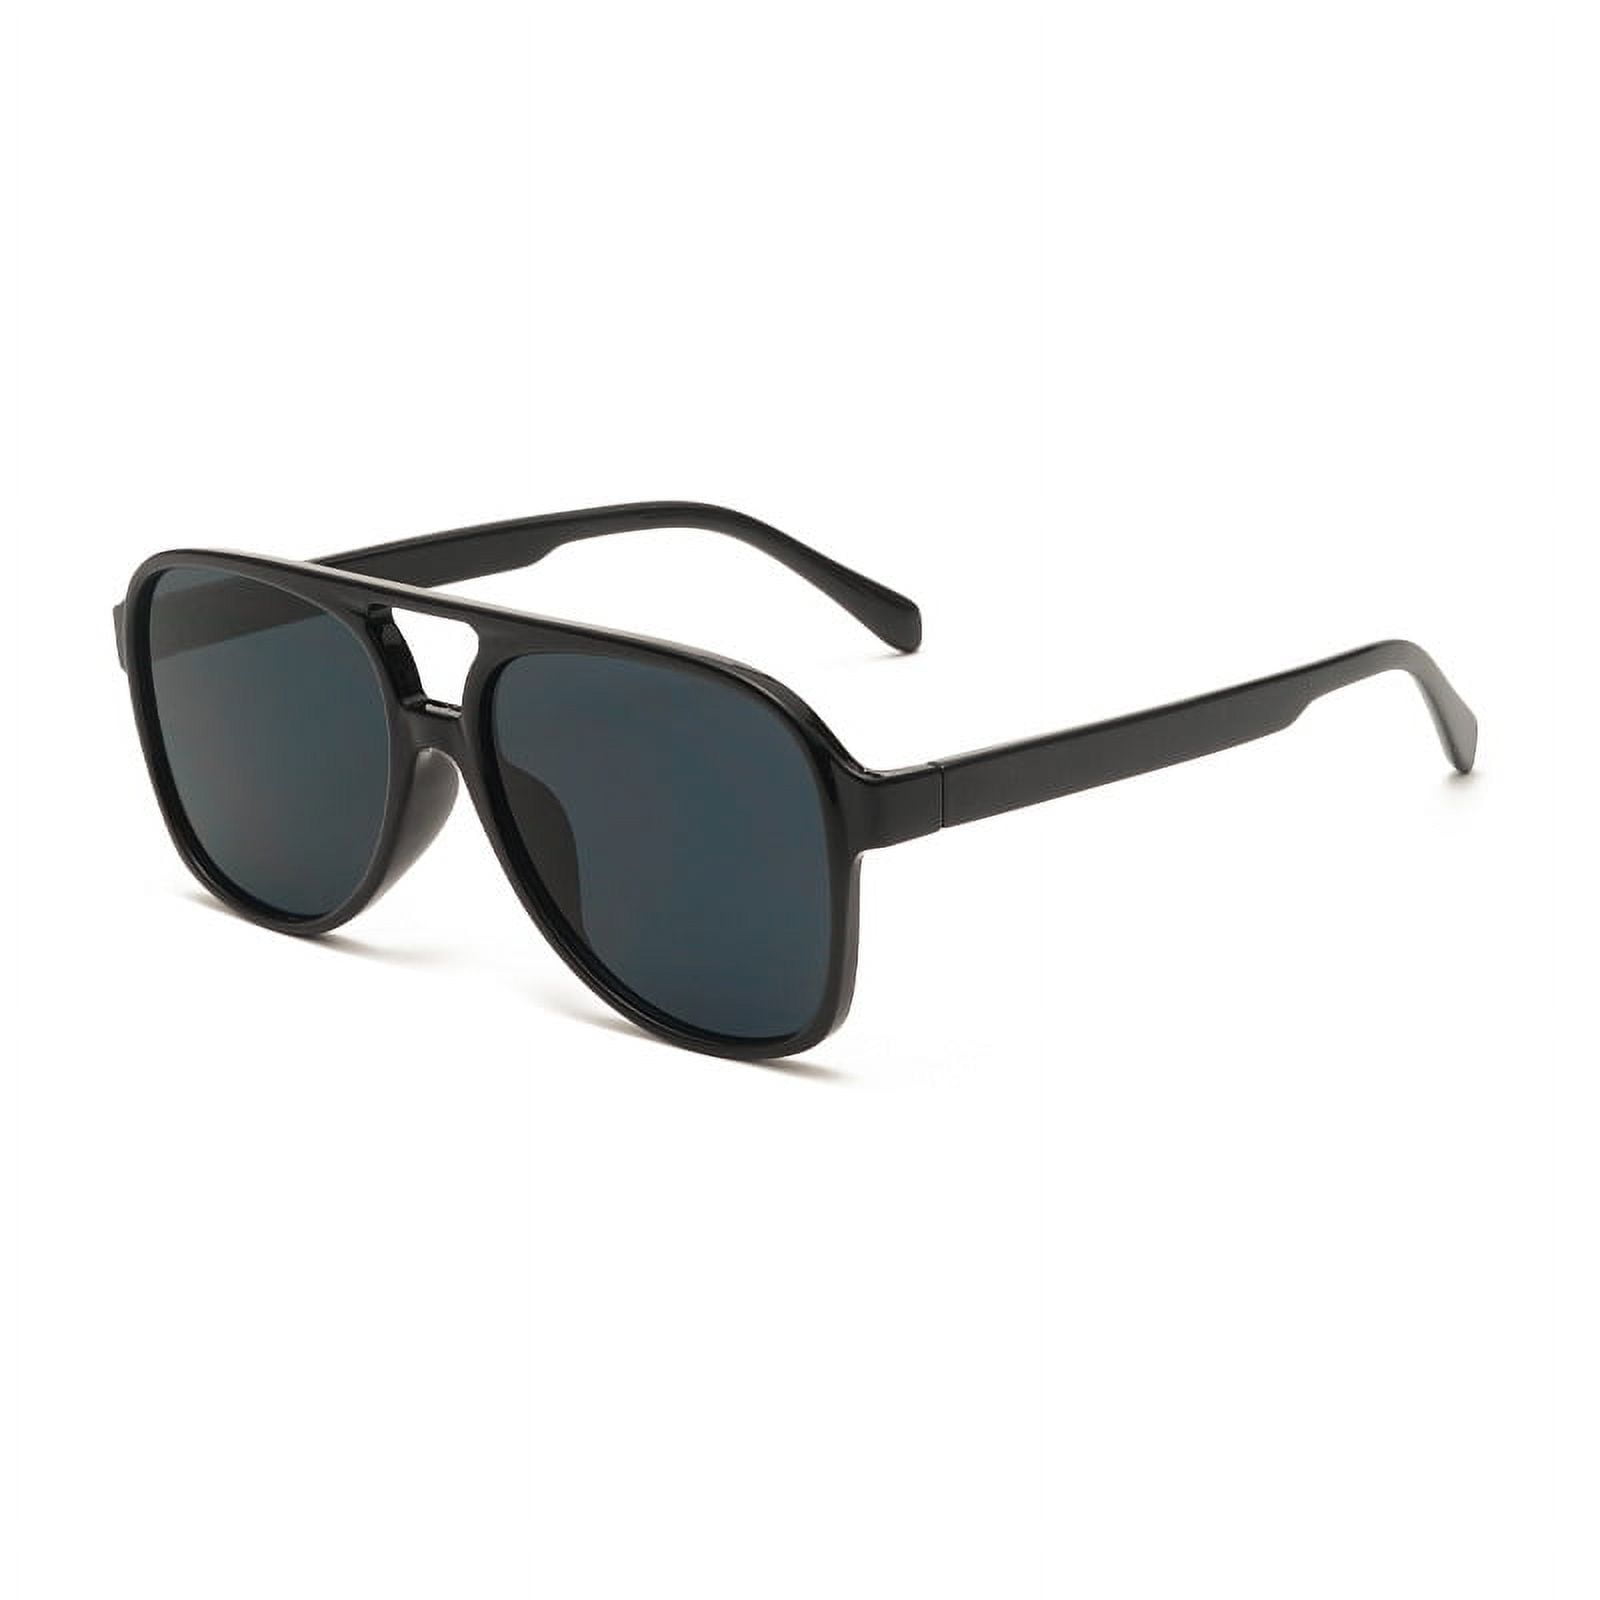 Glass lens polarized sunglasses for men women with spring hinges